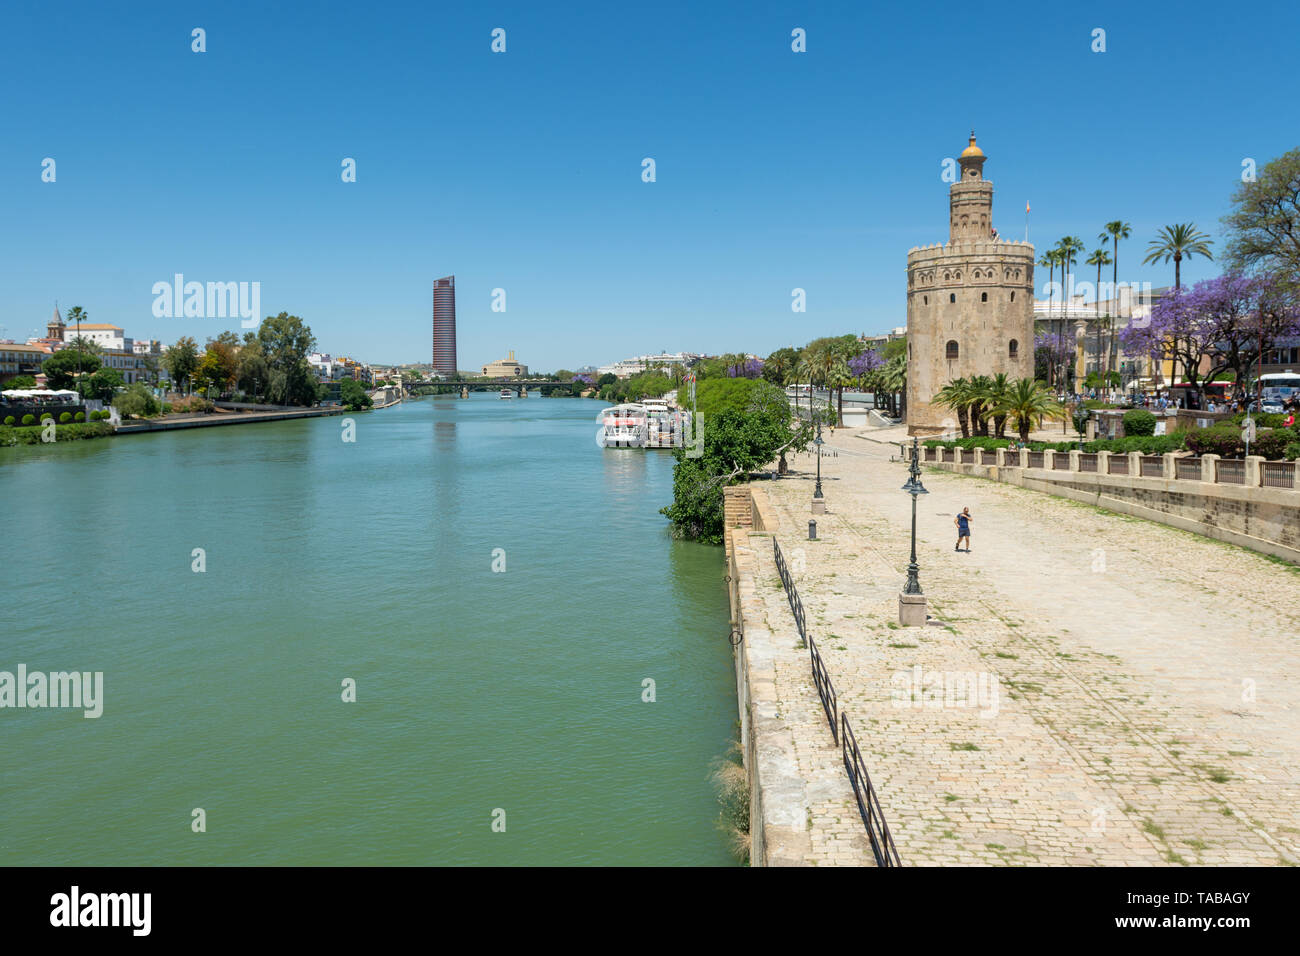 Torre del Oro Naval Museum Turm am Ufer des Canal de Alfonso XIII mit dem Torre Sevilla Turm in der Ferne, Sevilla, Region Andalusien, Spanien Stockfoto